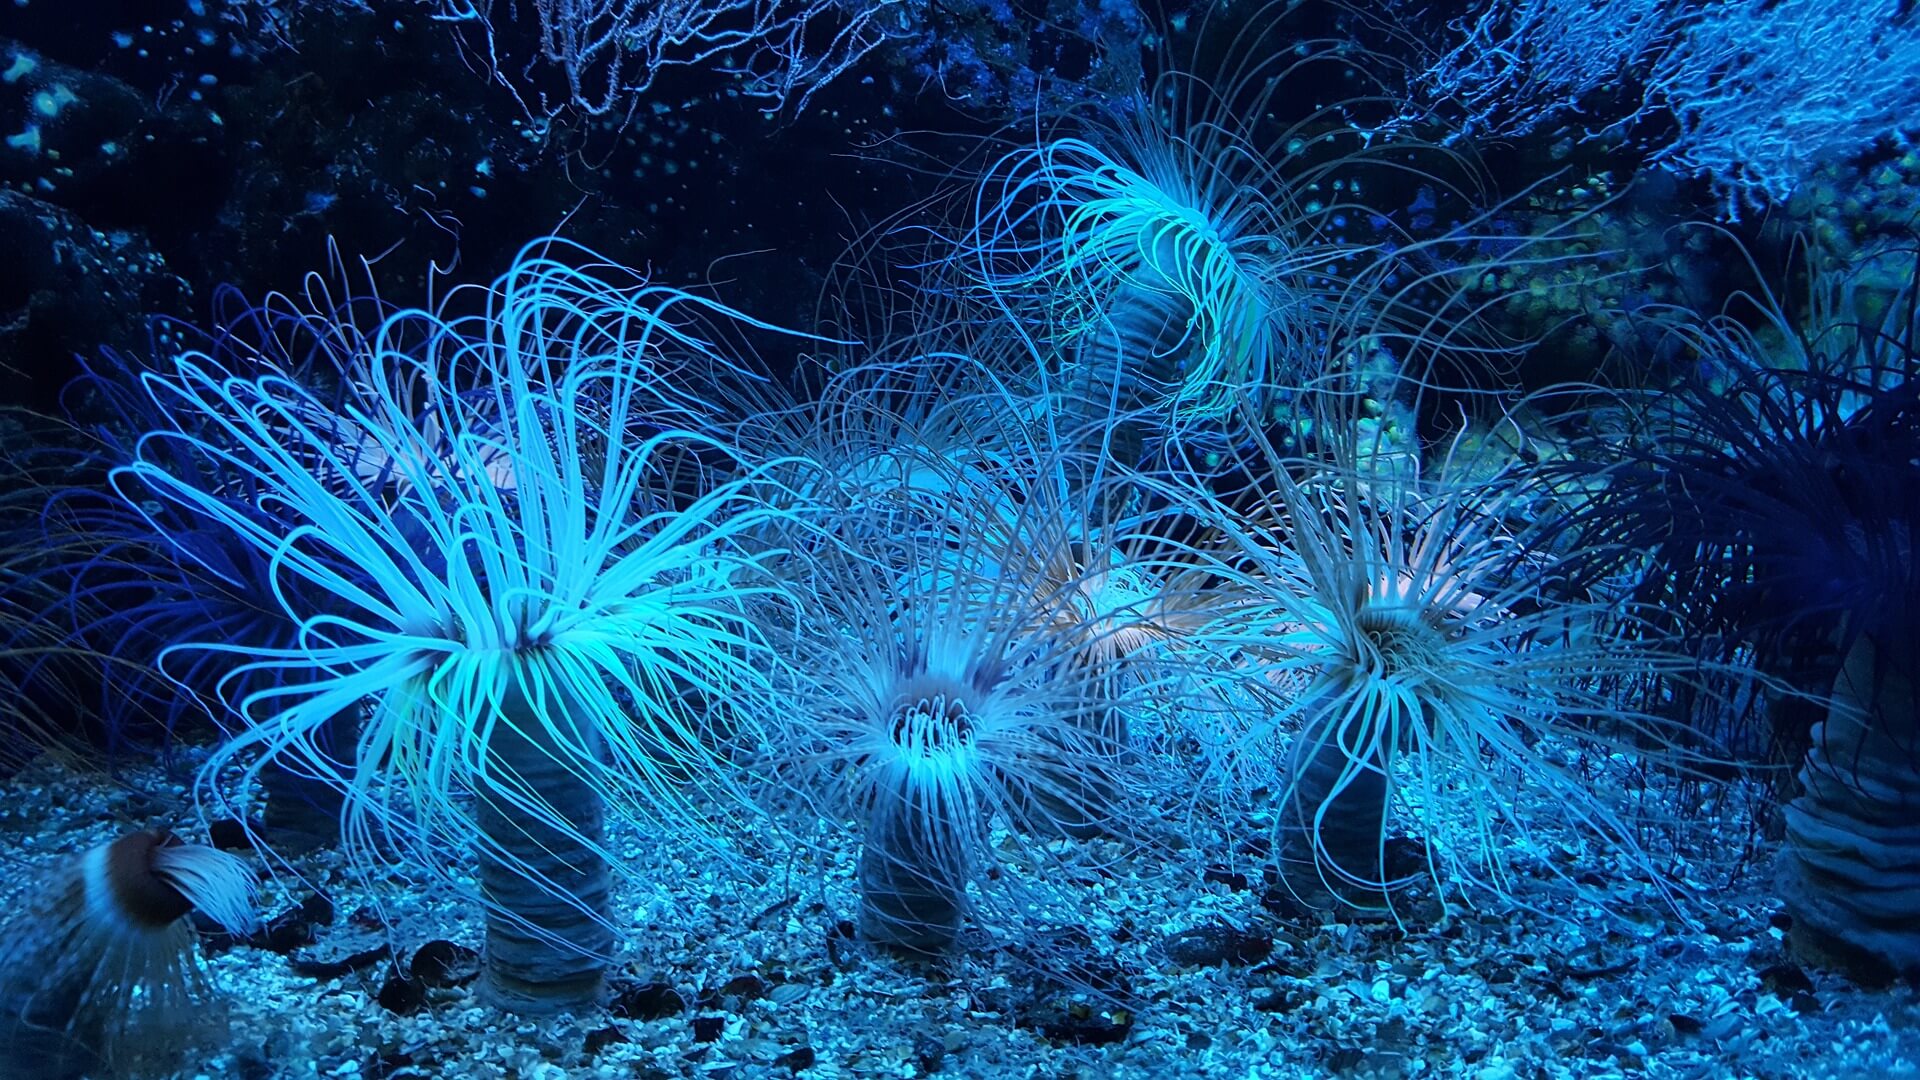 Blue anemones on the sea floor.